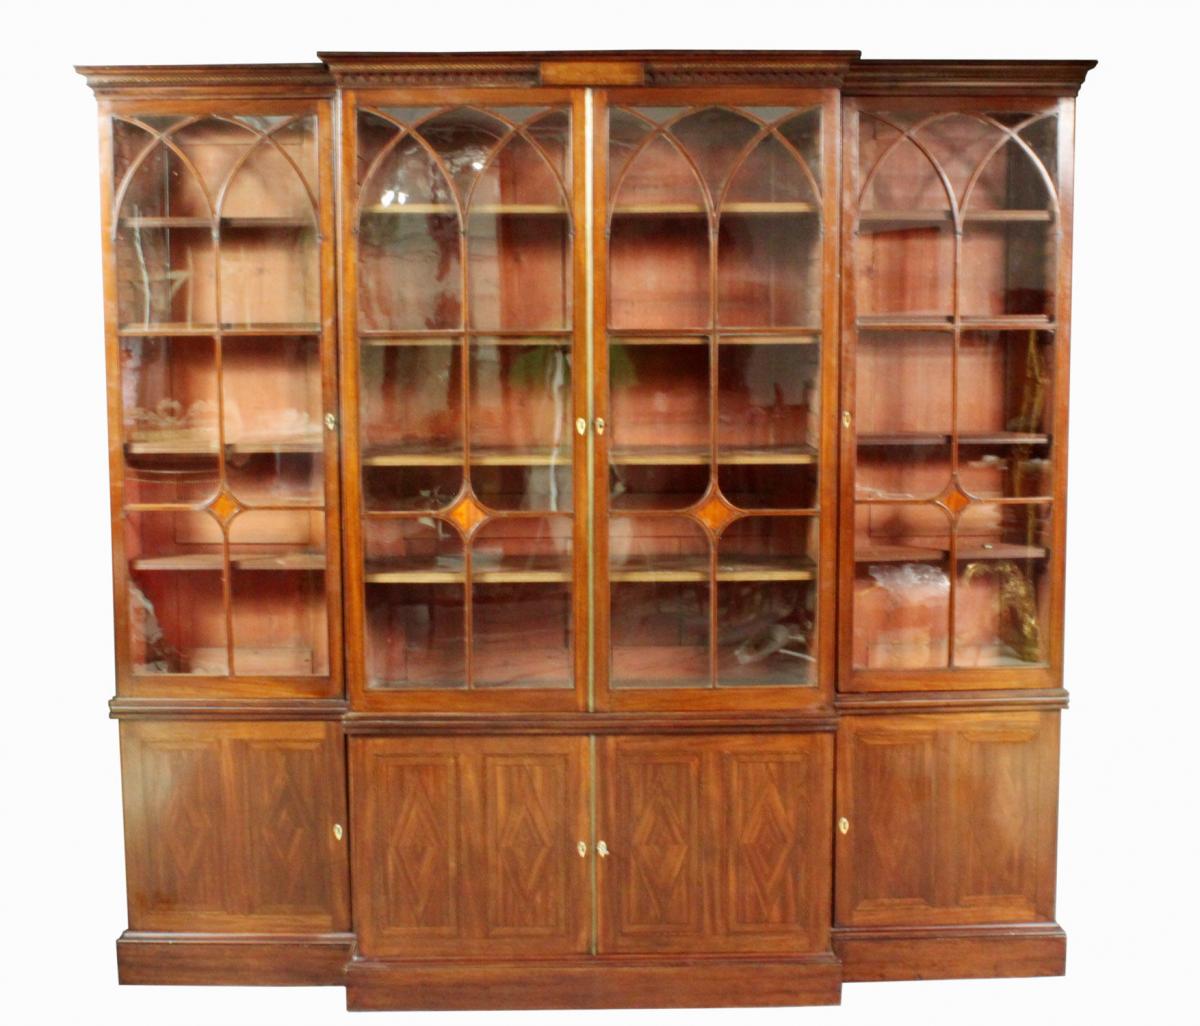 George III Sheraton period mahogany breakfront bookcase